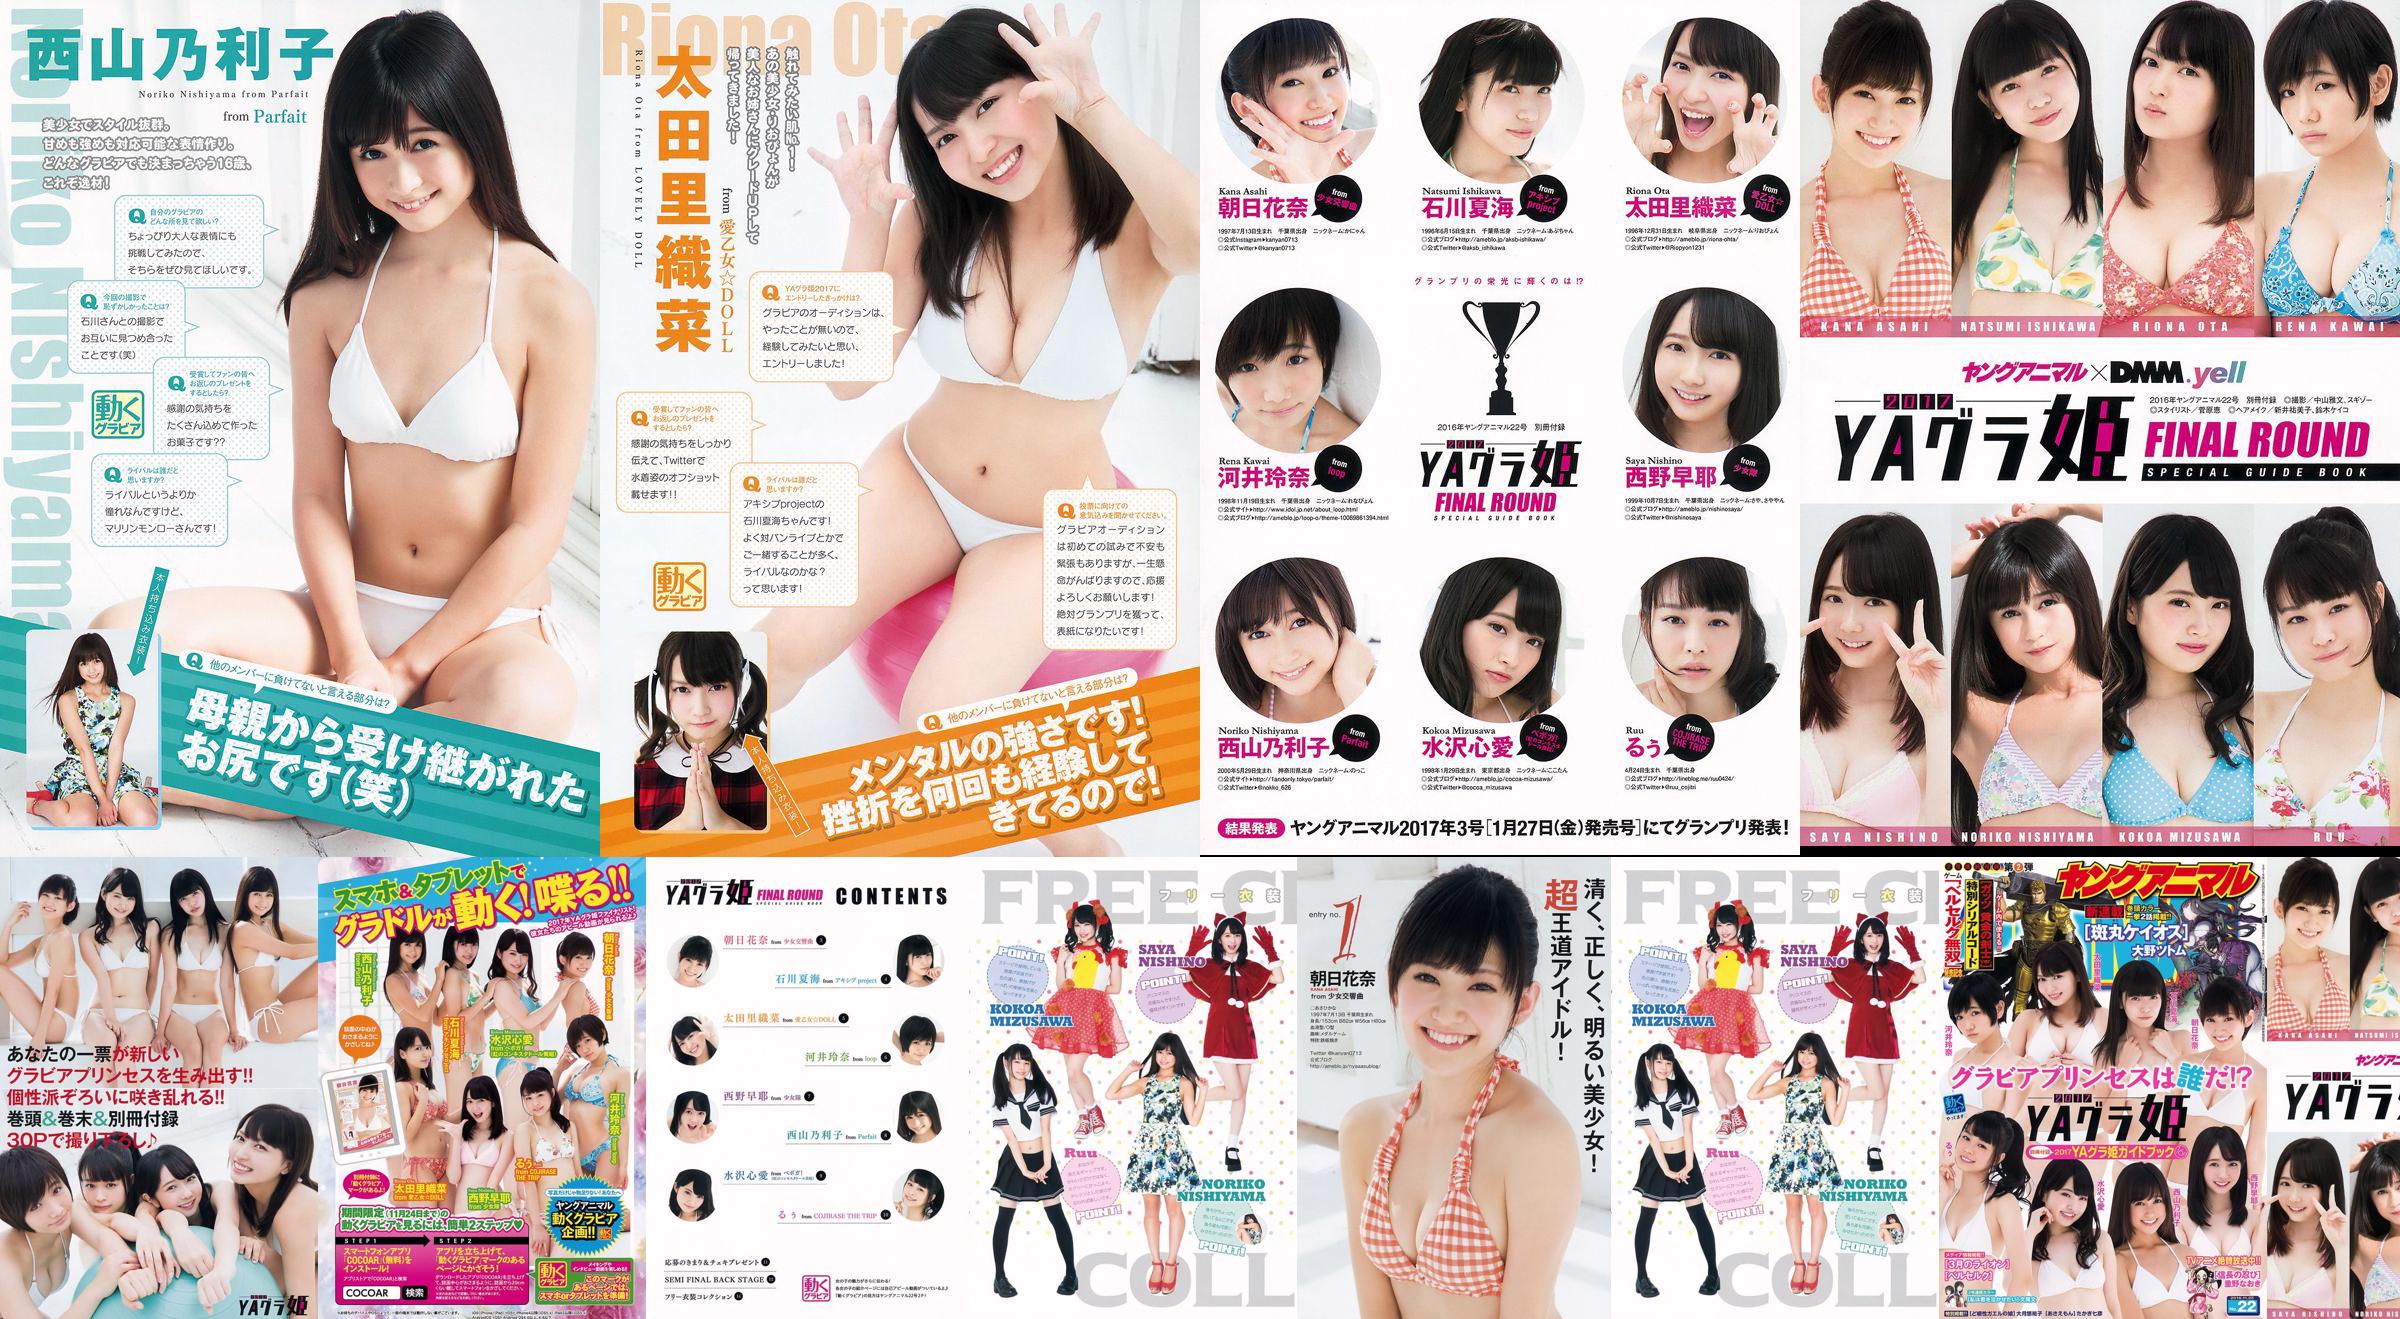 Mizusawa Beloved, Nishiyama Noriko, Nishino Haya, Kawai Reina, Ota Rina, Ishikawa Natsumi, Asahi Hana [น้องสัตว์] นิตยสารภาพถ่ายฉบับที่ 22 ประจำปี 2559 No.268500 หน้า 1